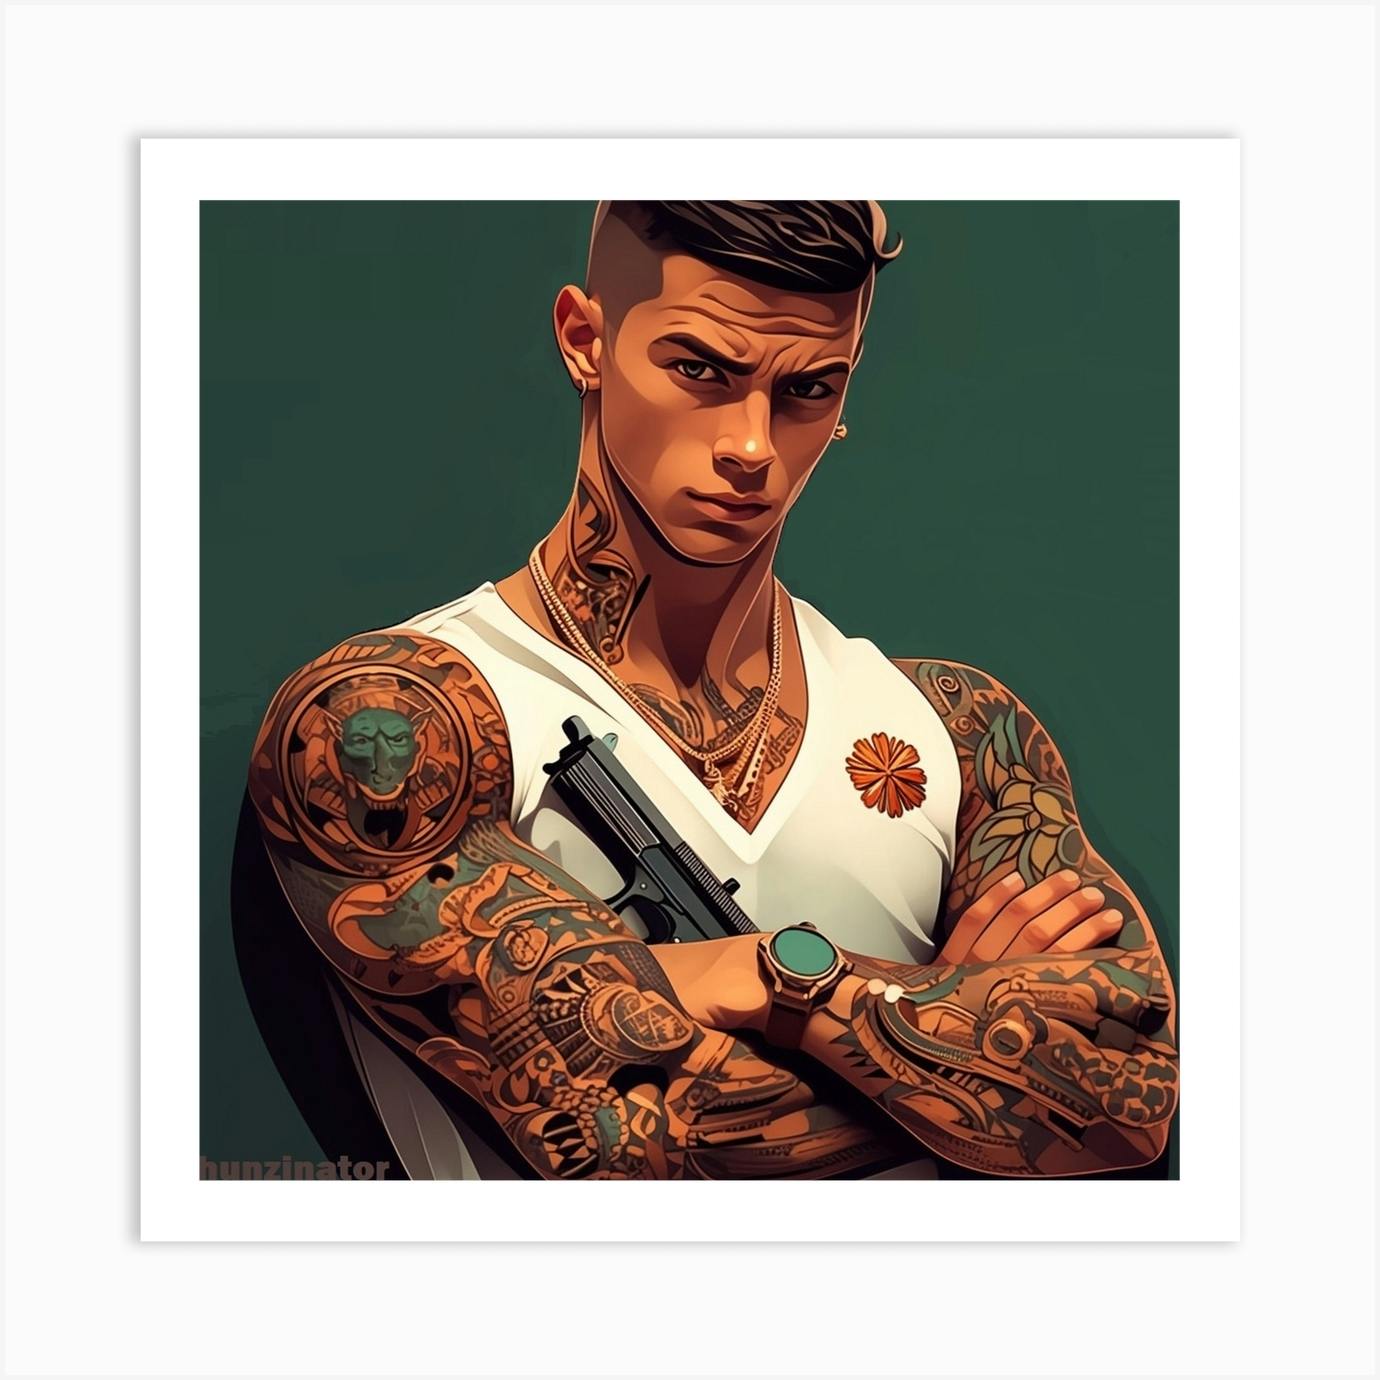 Ronaldo Tattoo initial page by hypocrisy-47 on DeviantArt